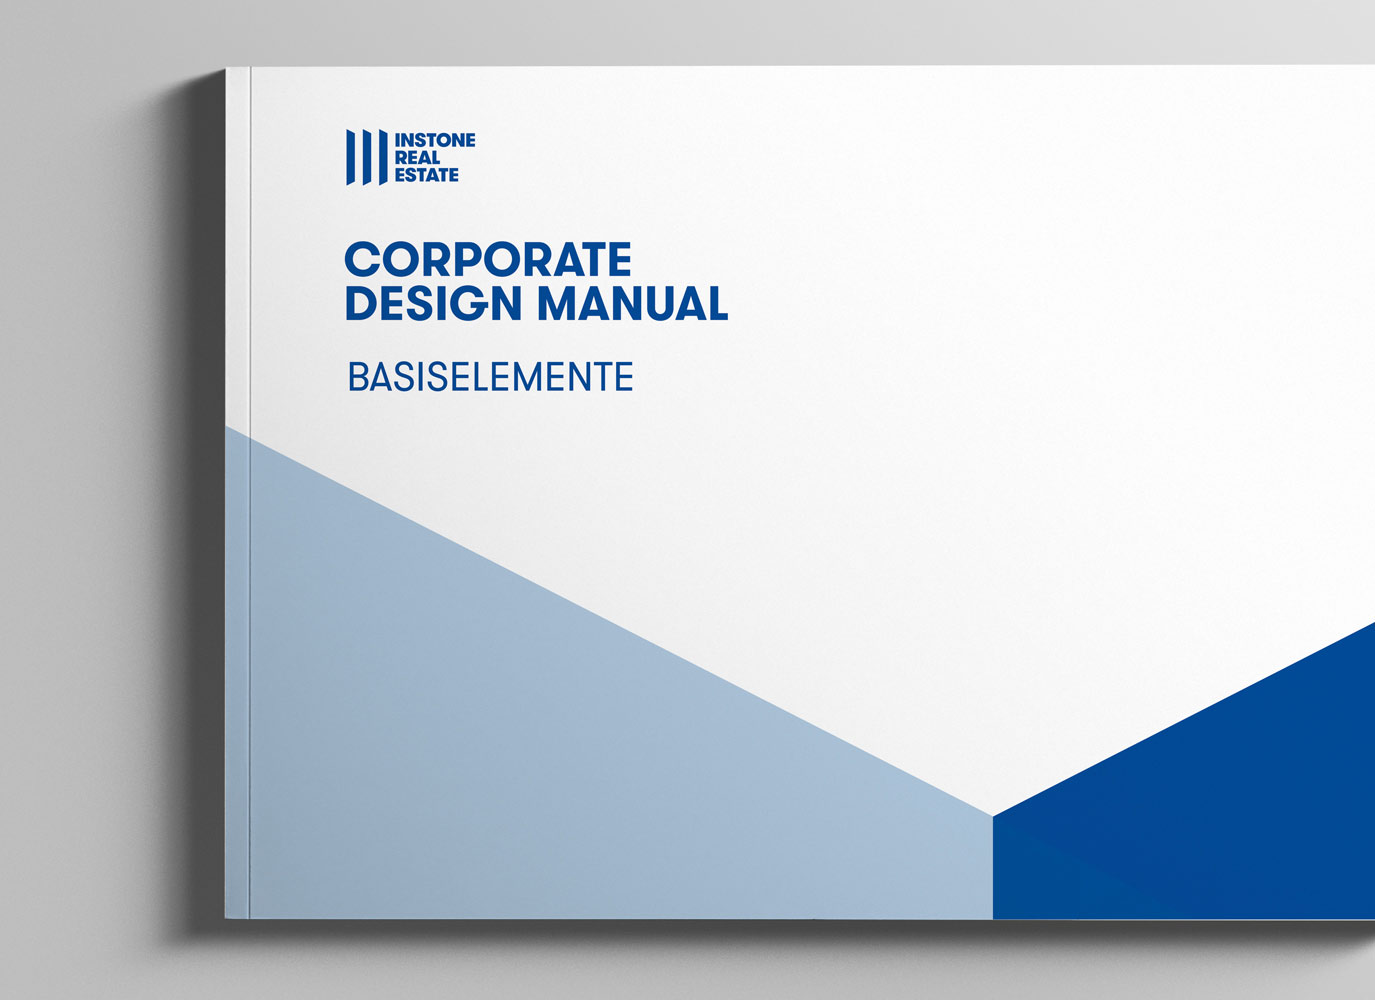 Instone Real Estate Corporate Design Manual